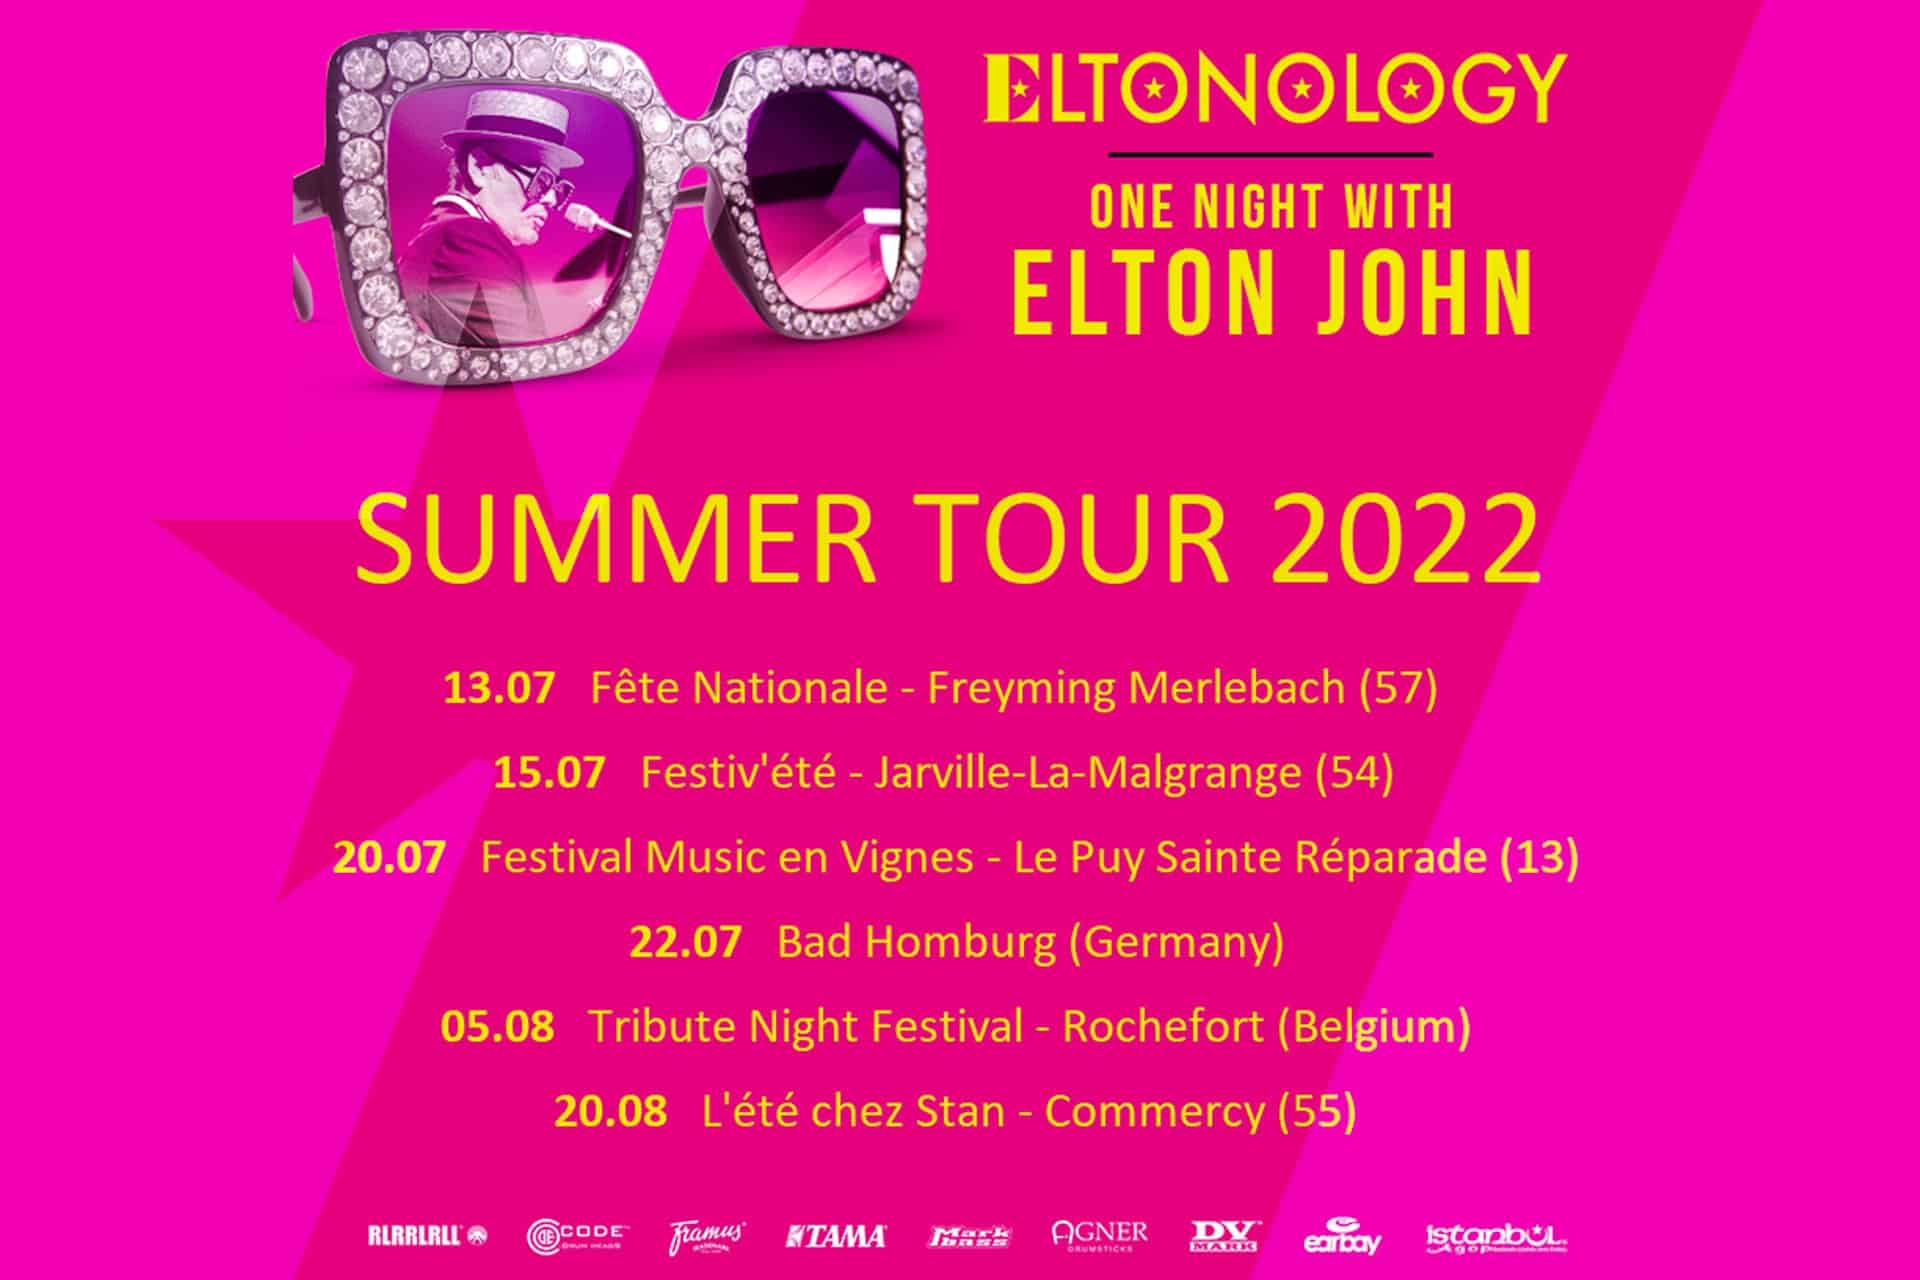 Eltonology 2022 Summer Tour